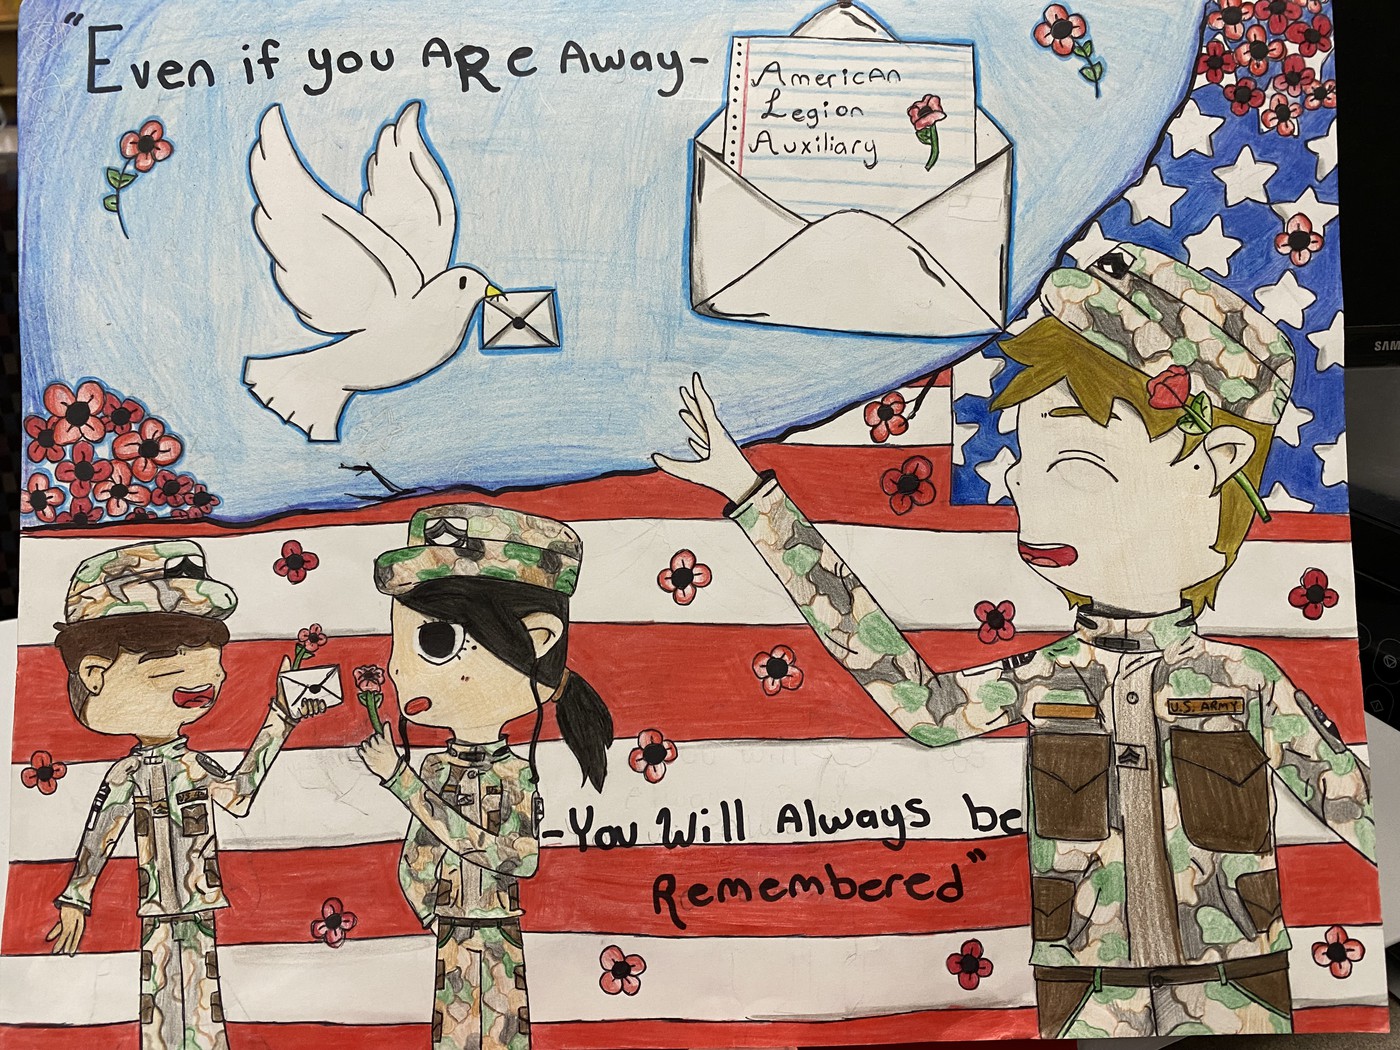 American Legion - "What Patriotism Means to Me Essay Contest"